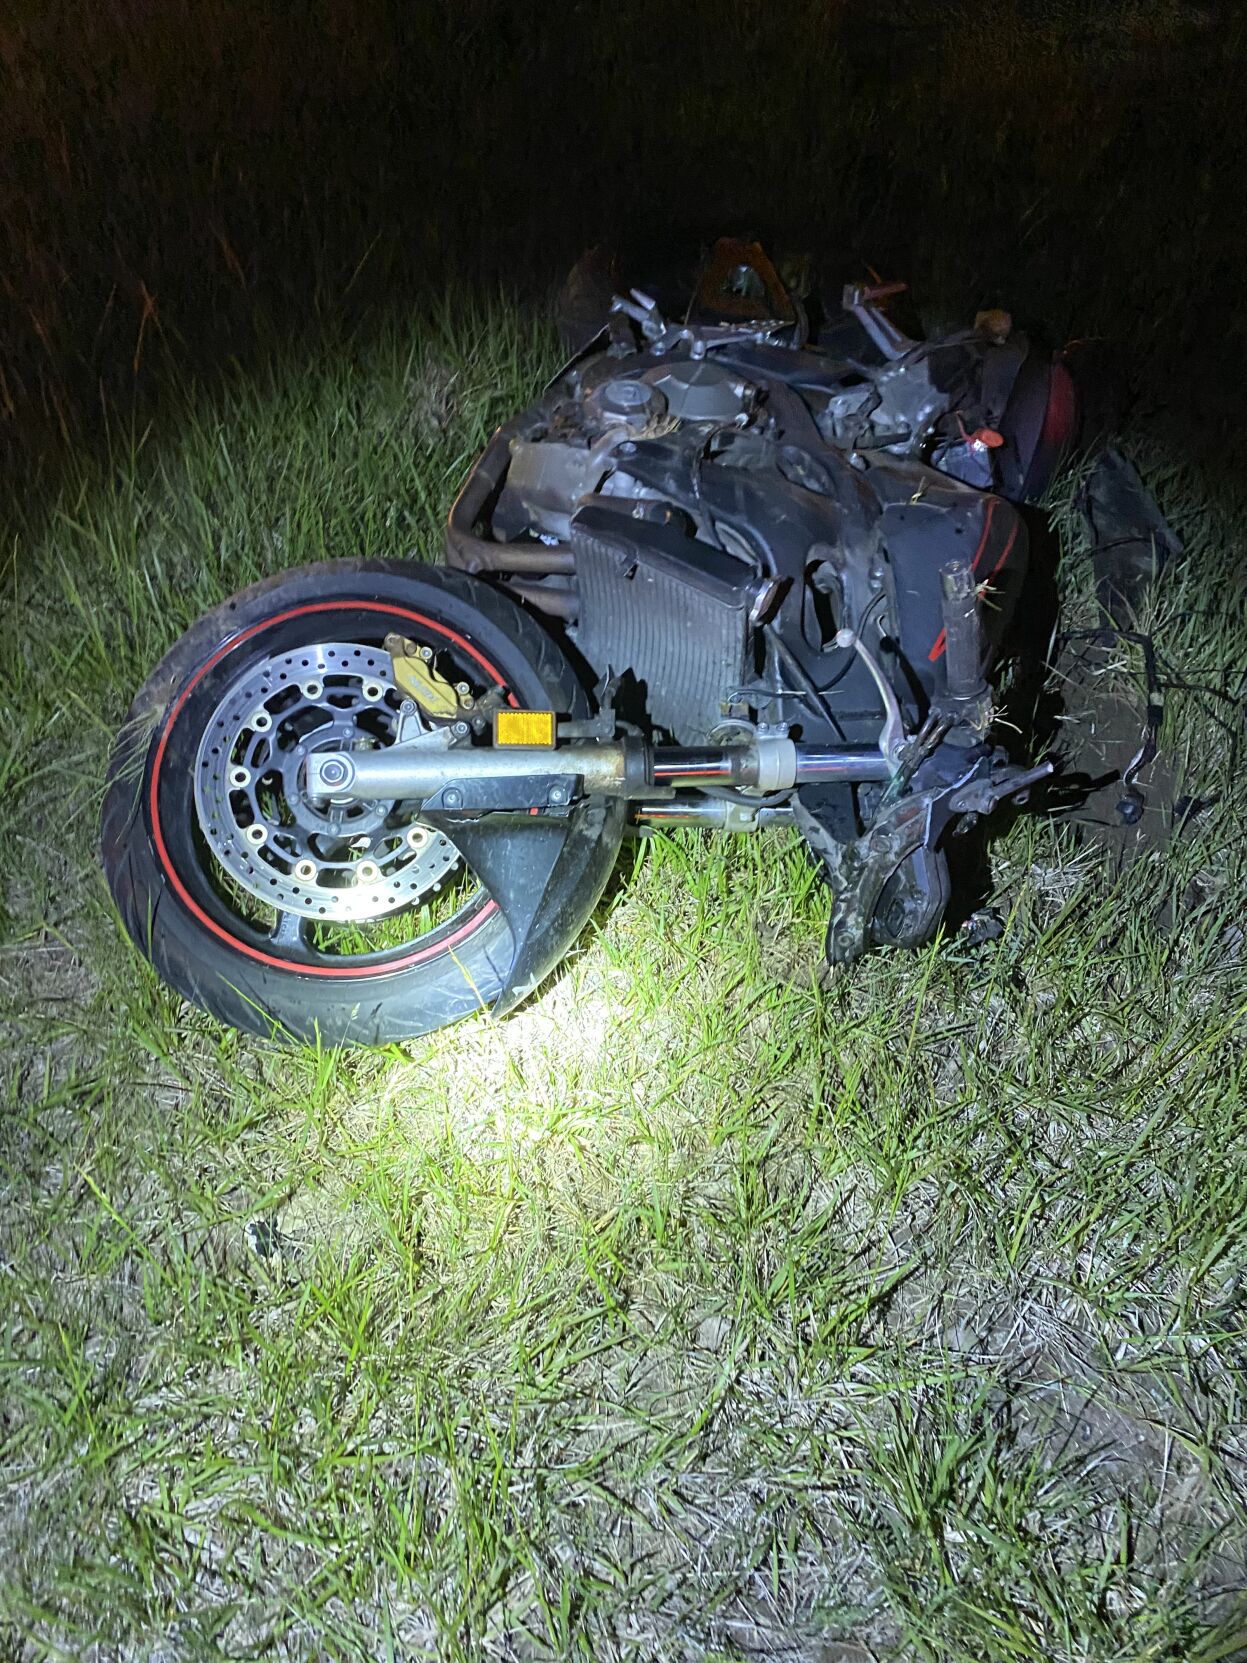 3 cars crash after driver brakes for deer in DeKalb County